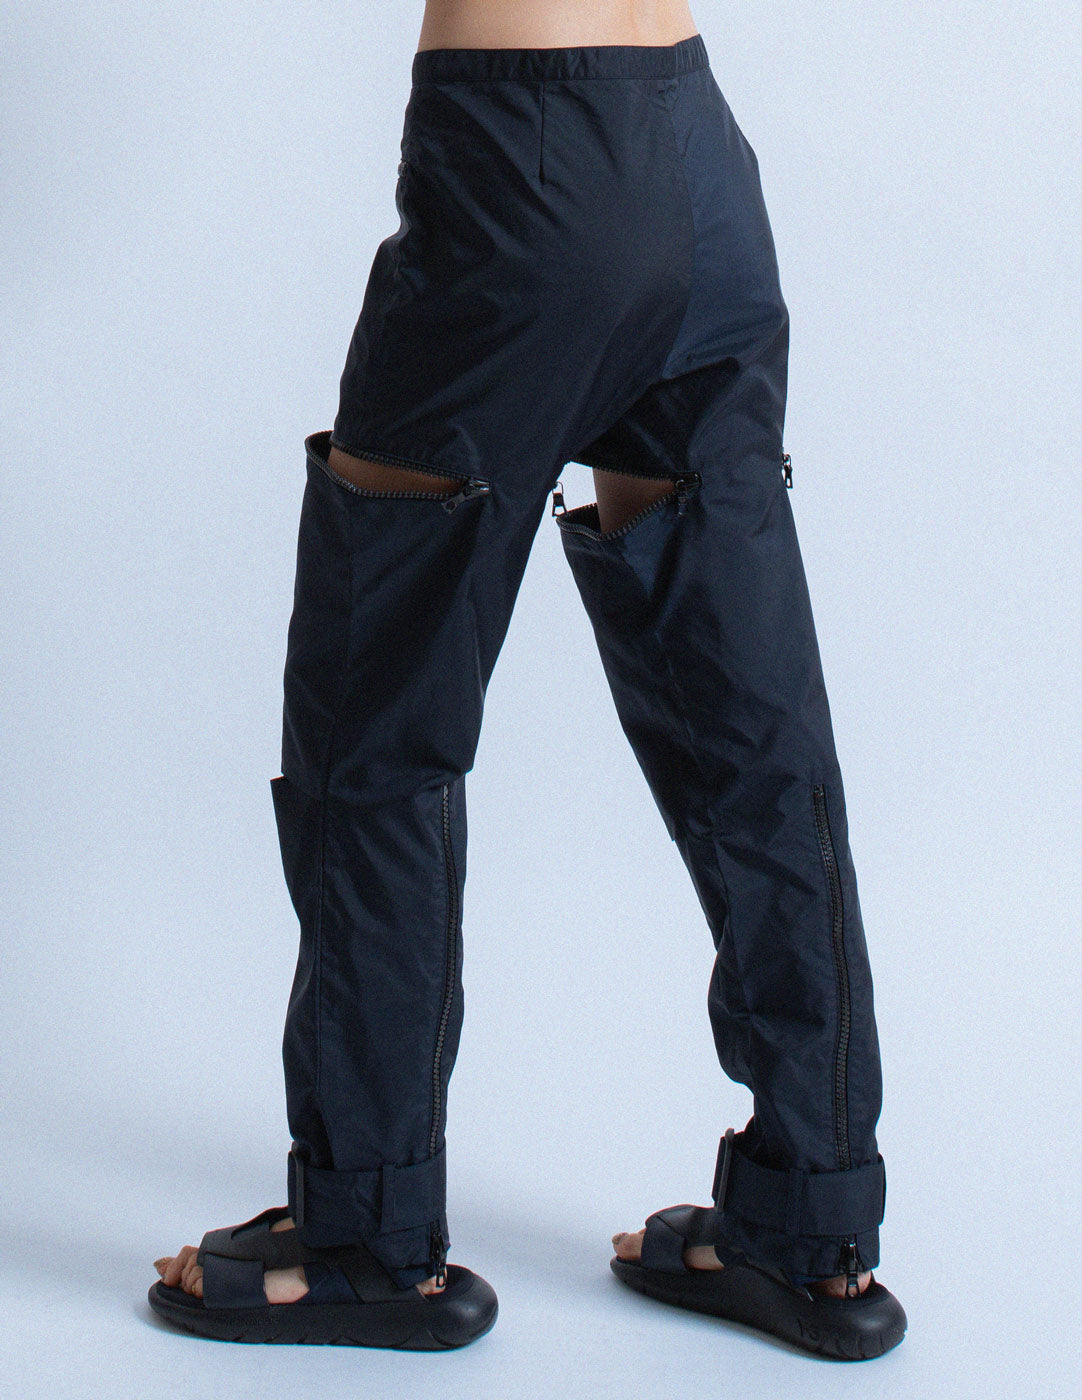 Miu Miu convertible nylon track pants side detail